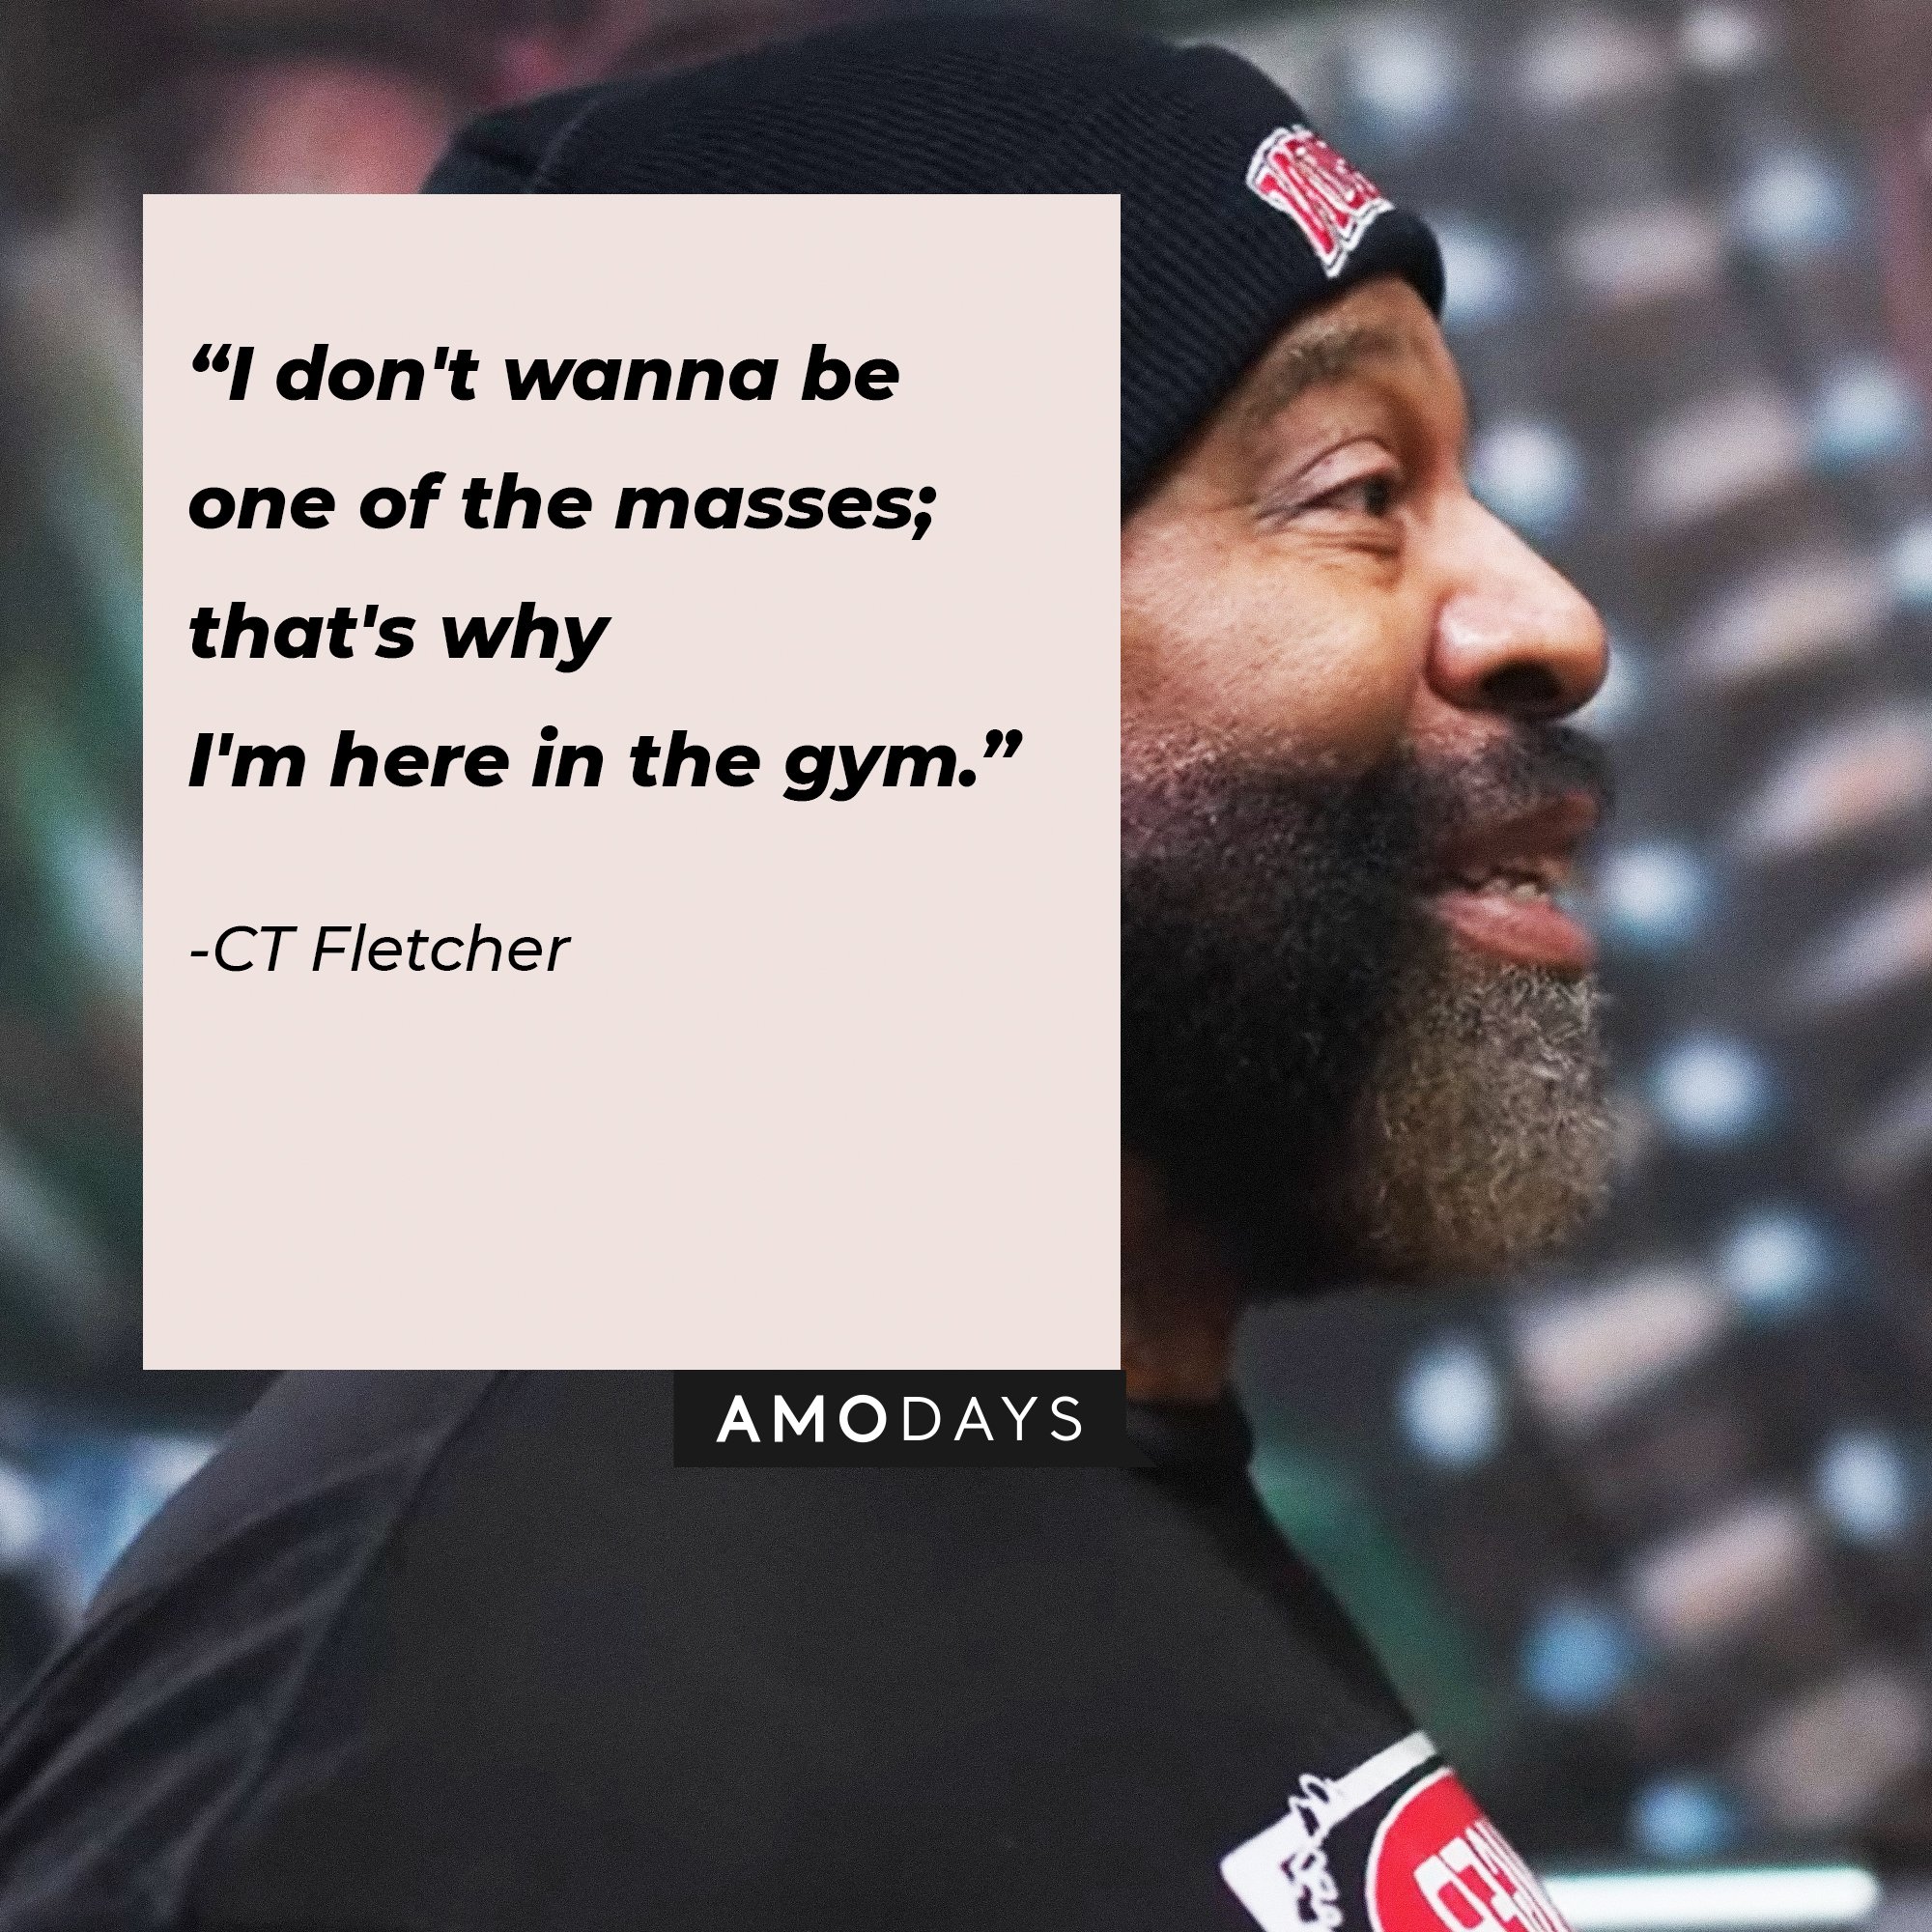 CT Fletcher's quote:\\\\\\\\u00a0"I don't wanna be one of the masses; that's why I'm here in the gym."\\\\\\\\u00a0| Image: AmoDays